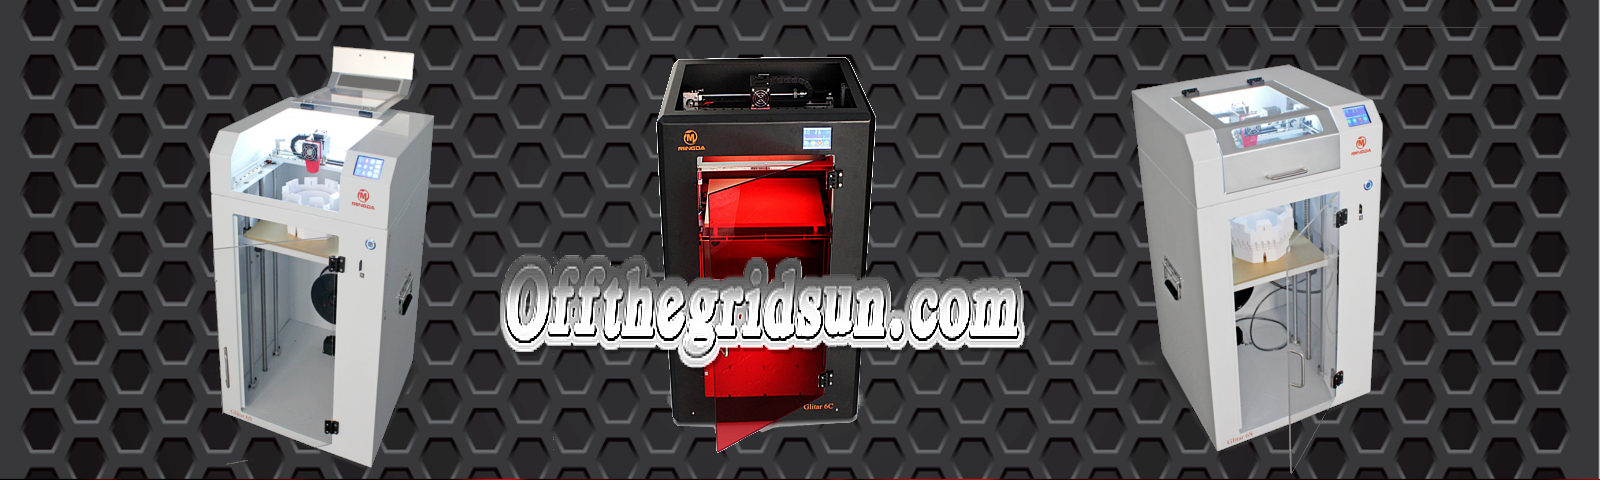 Large 3D Printer & Filament